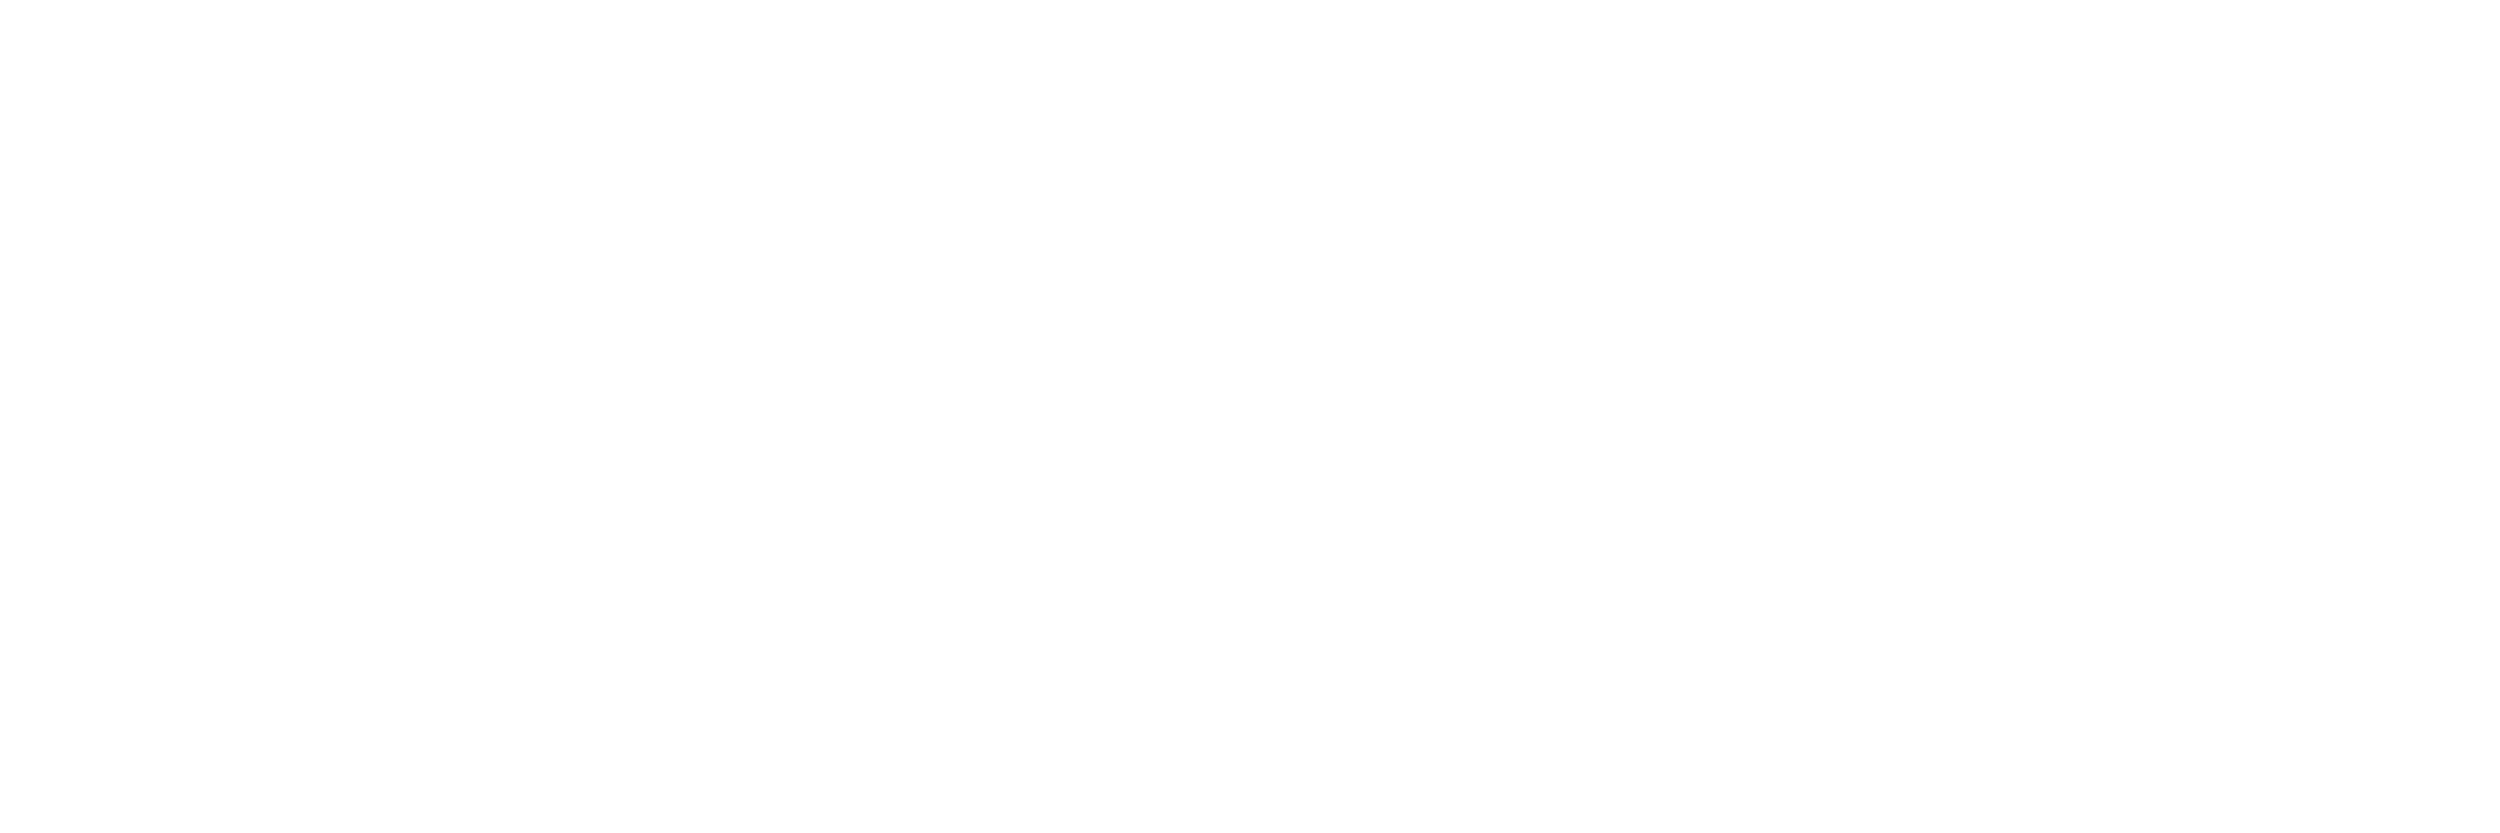 coaching headers2.png